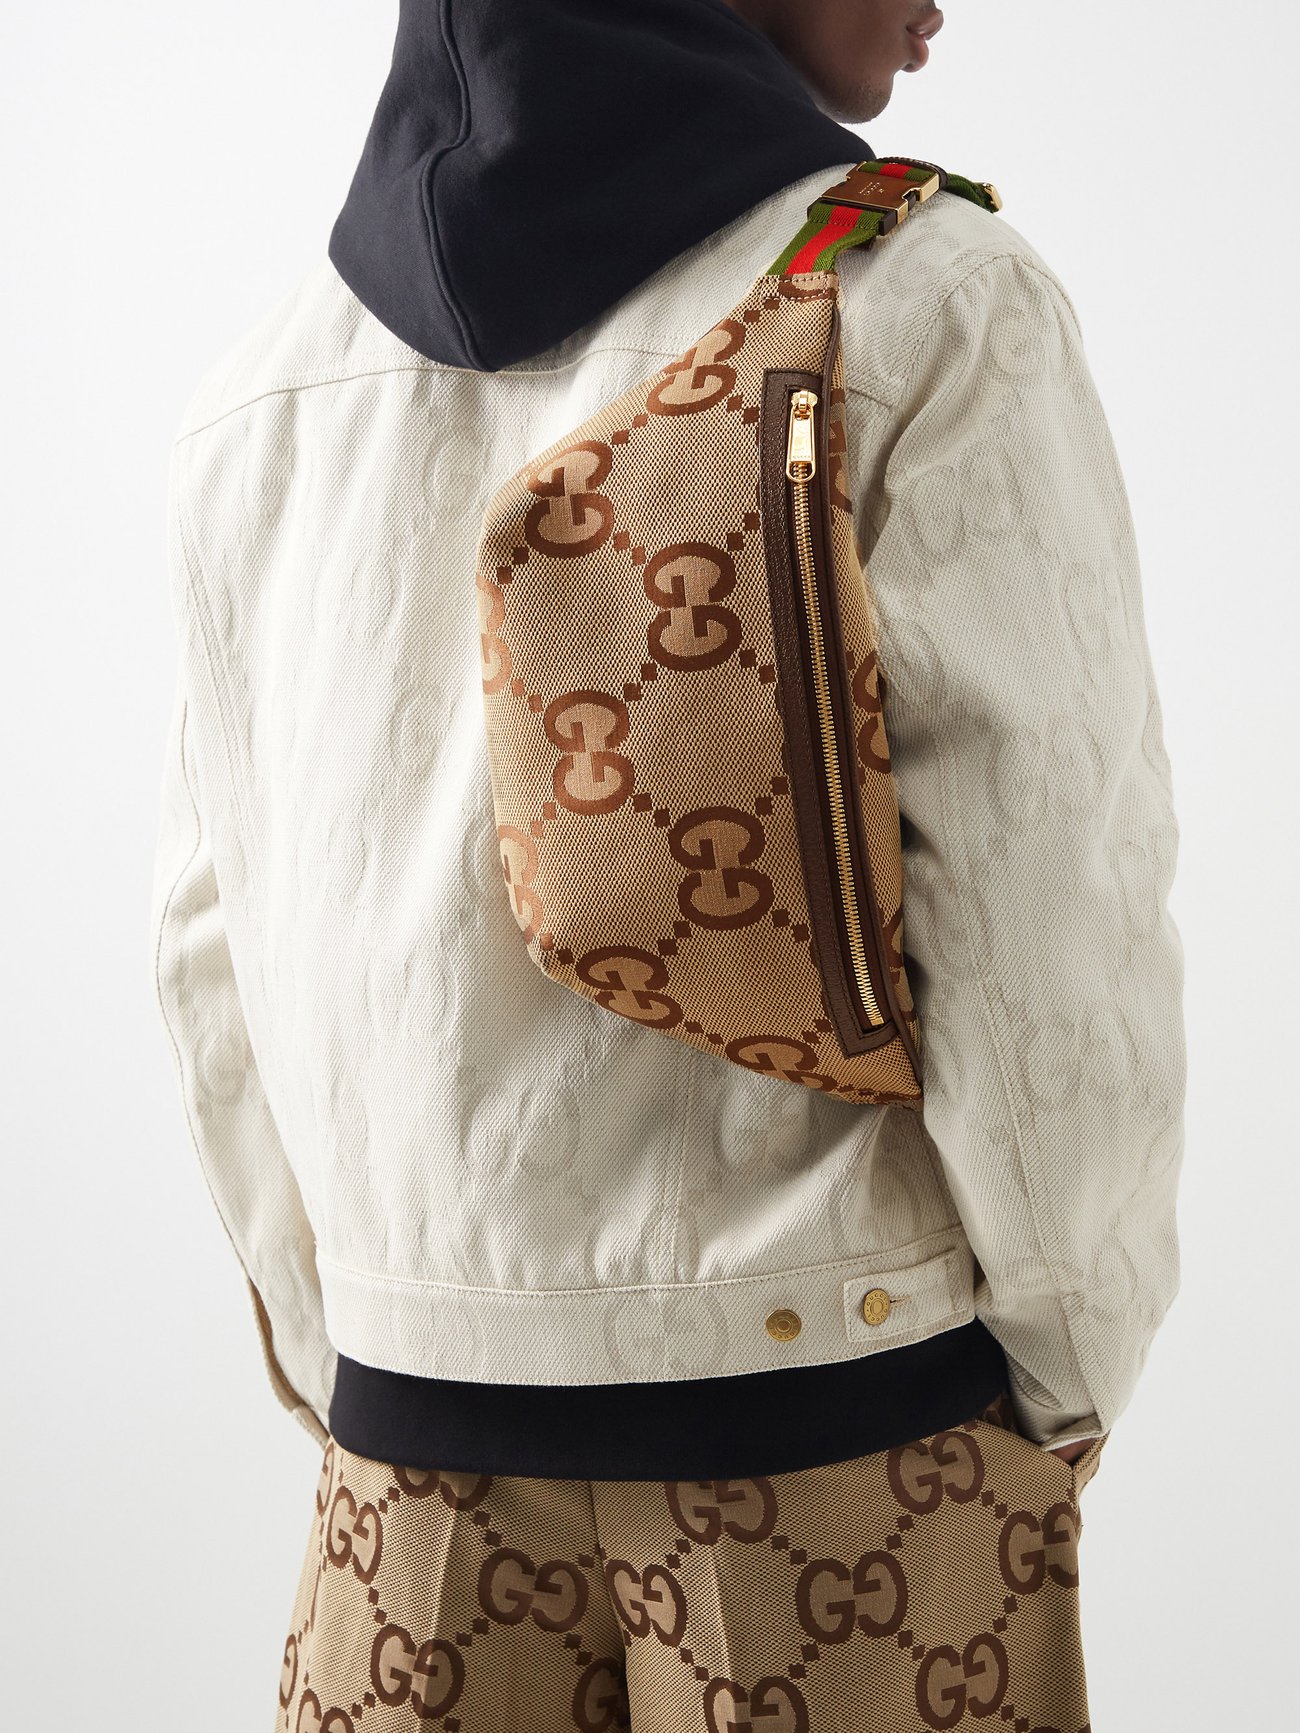 Beige Jumbo GG-canvas belt bag, Gucci